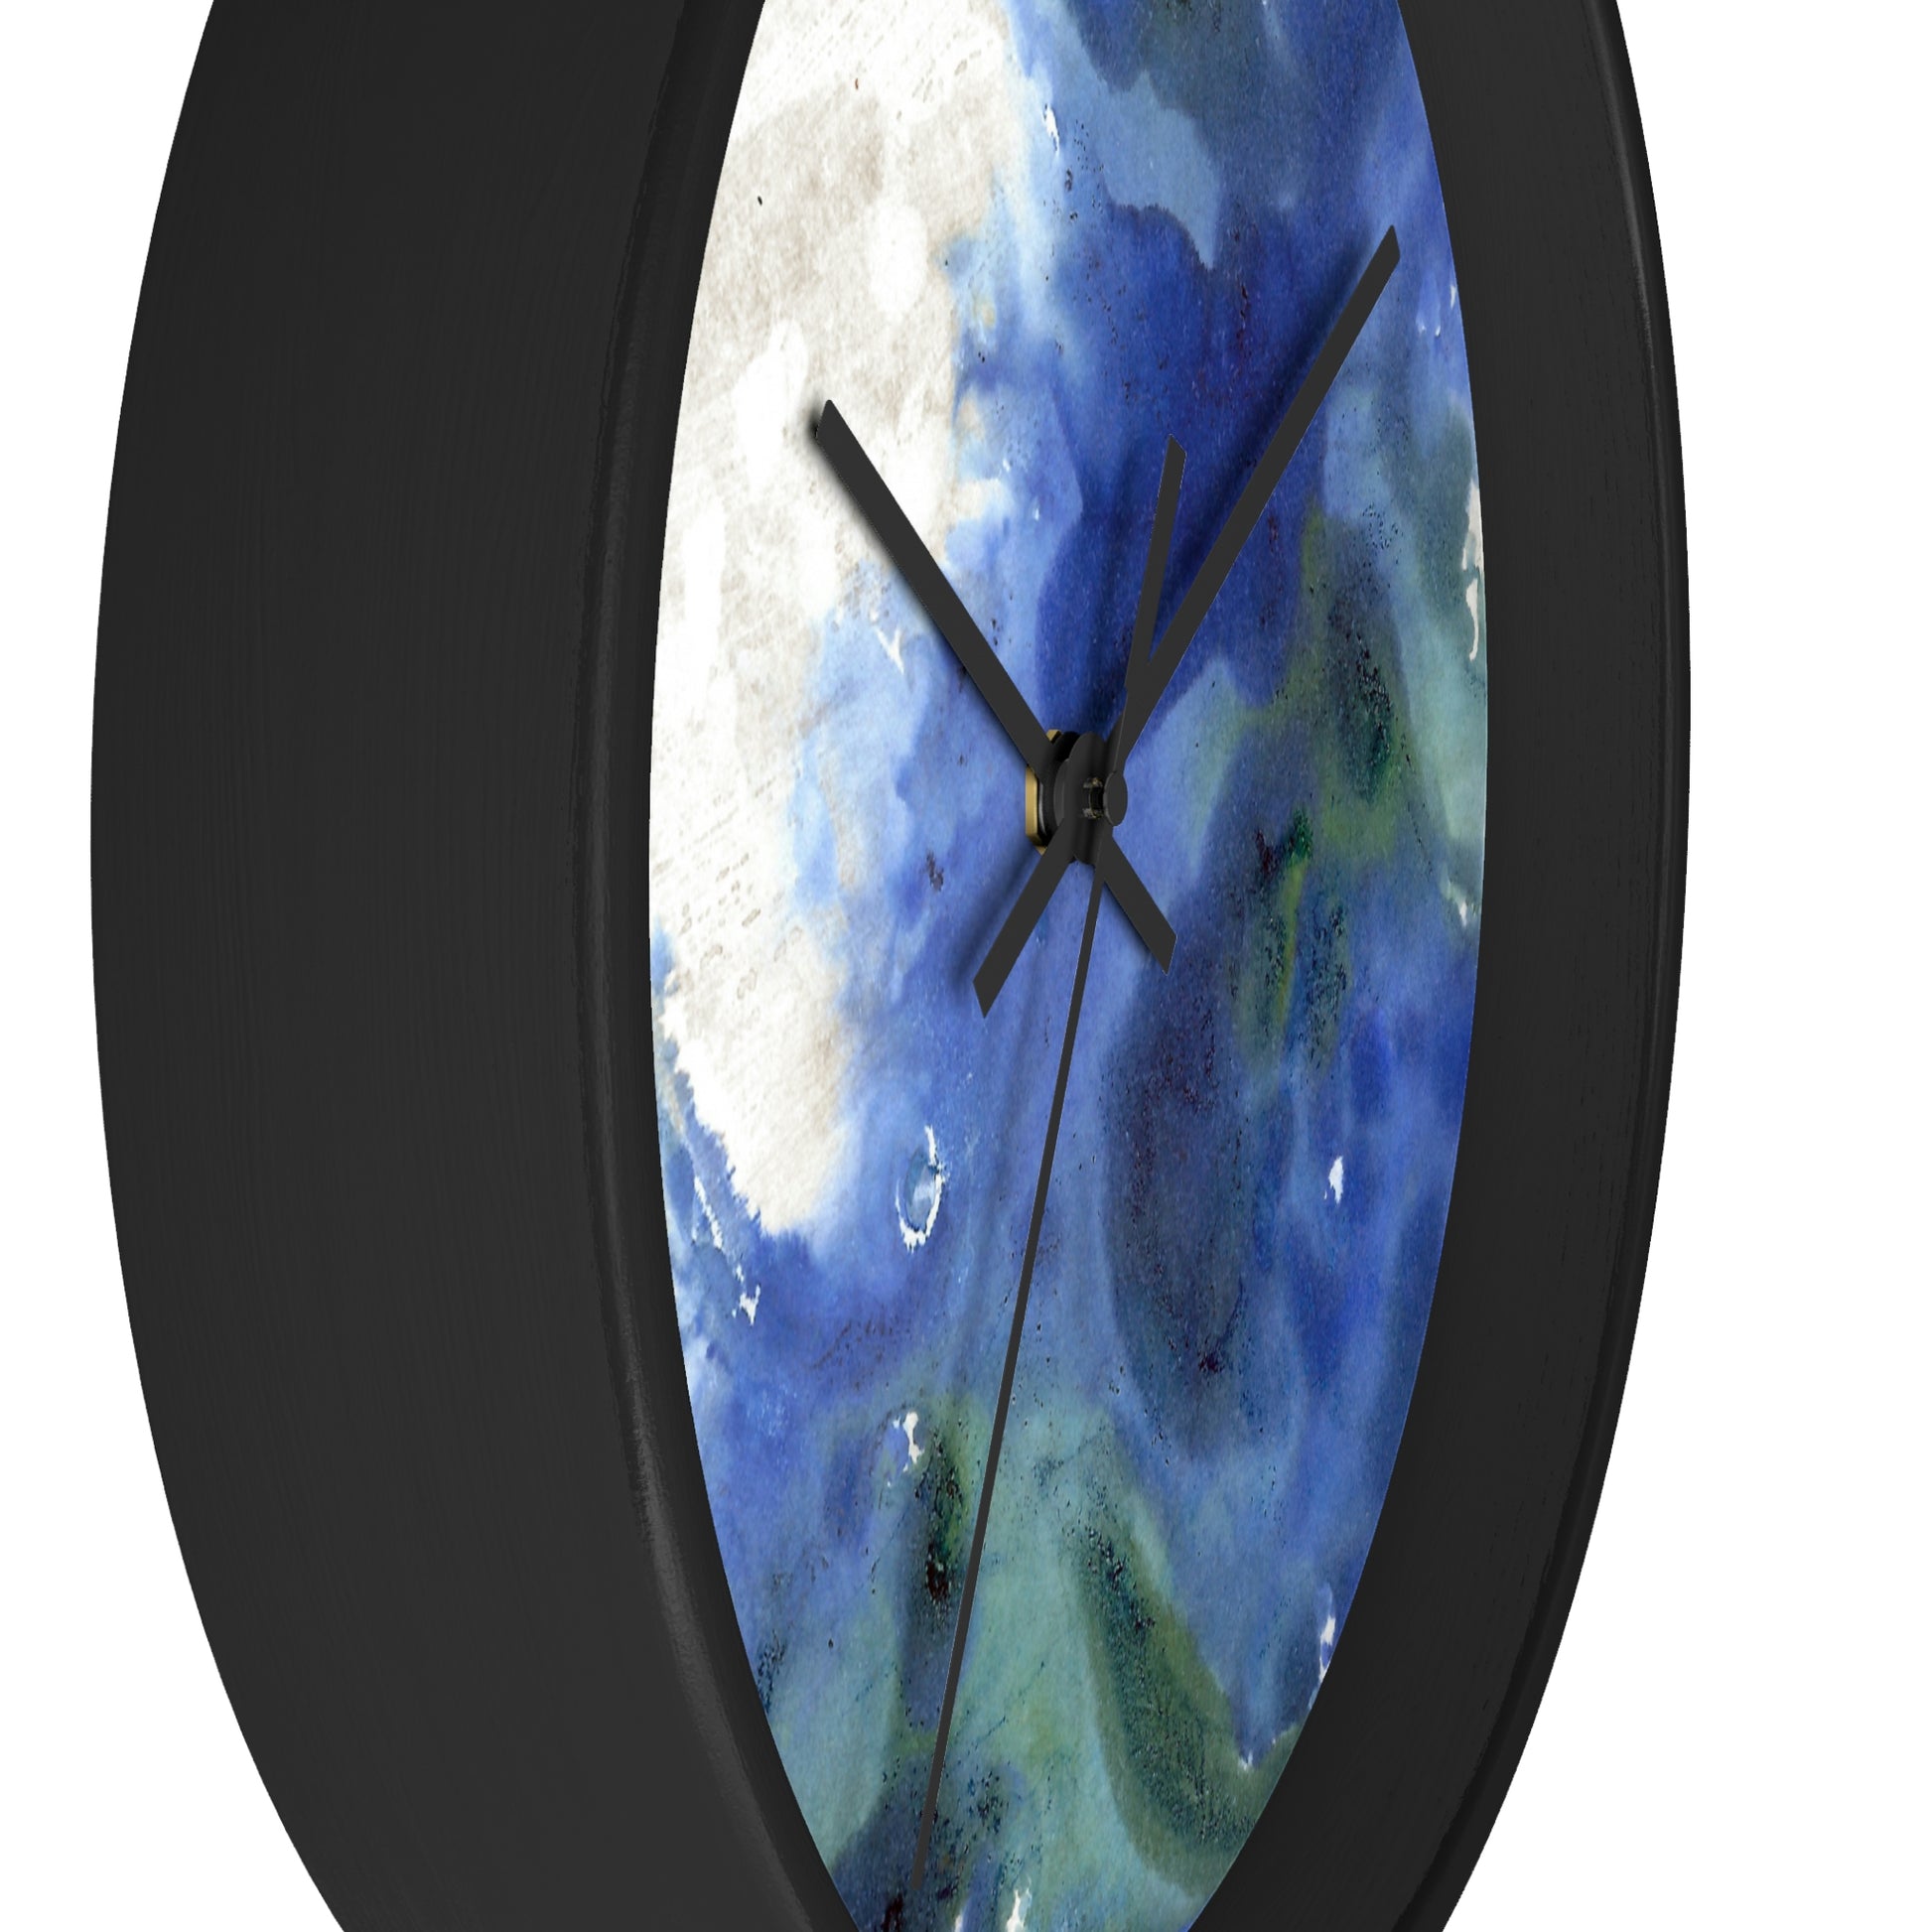 Mother Earth Wall Clock - Alja Design